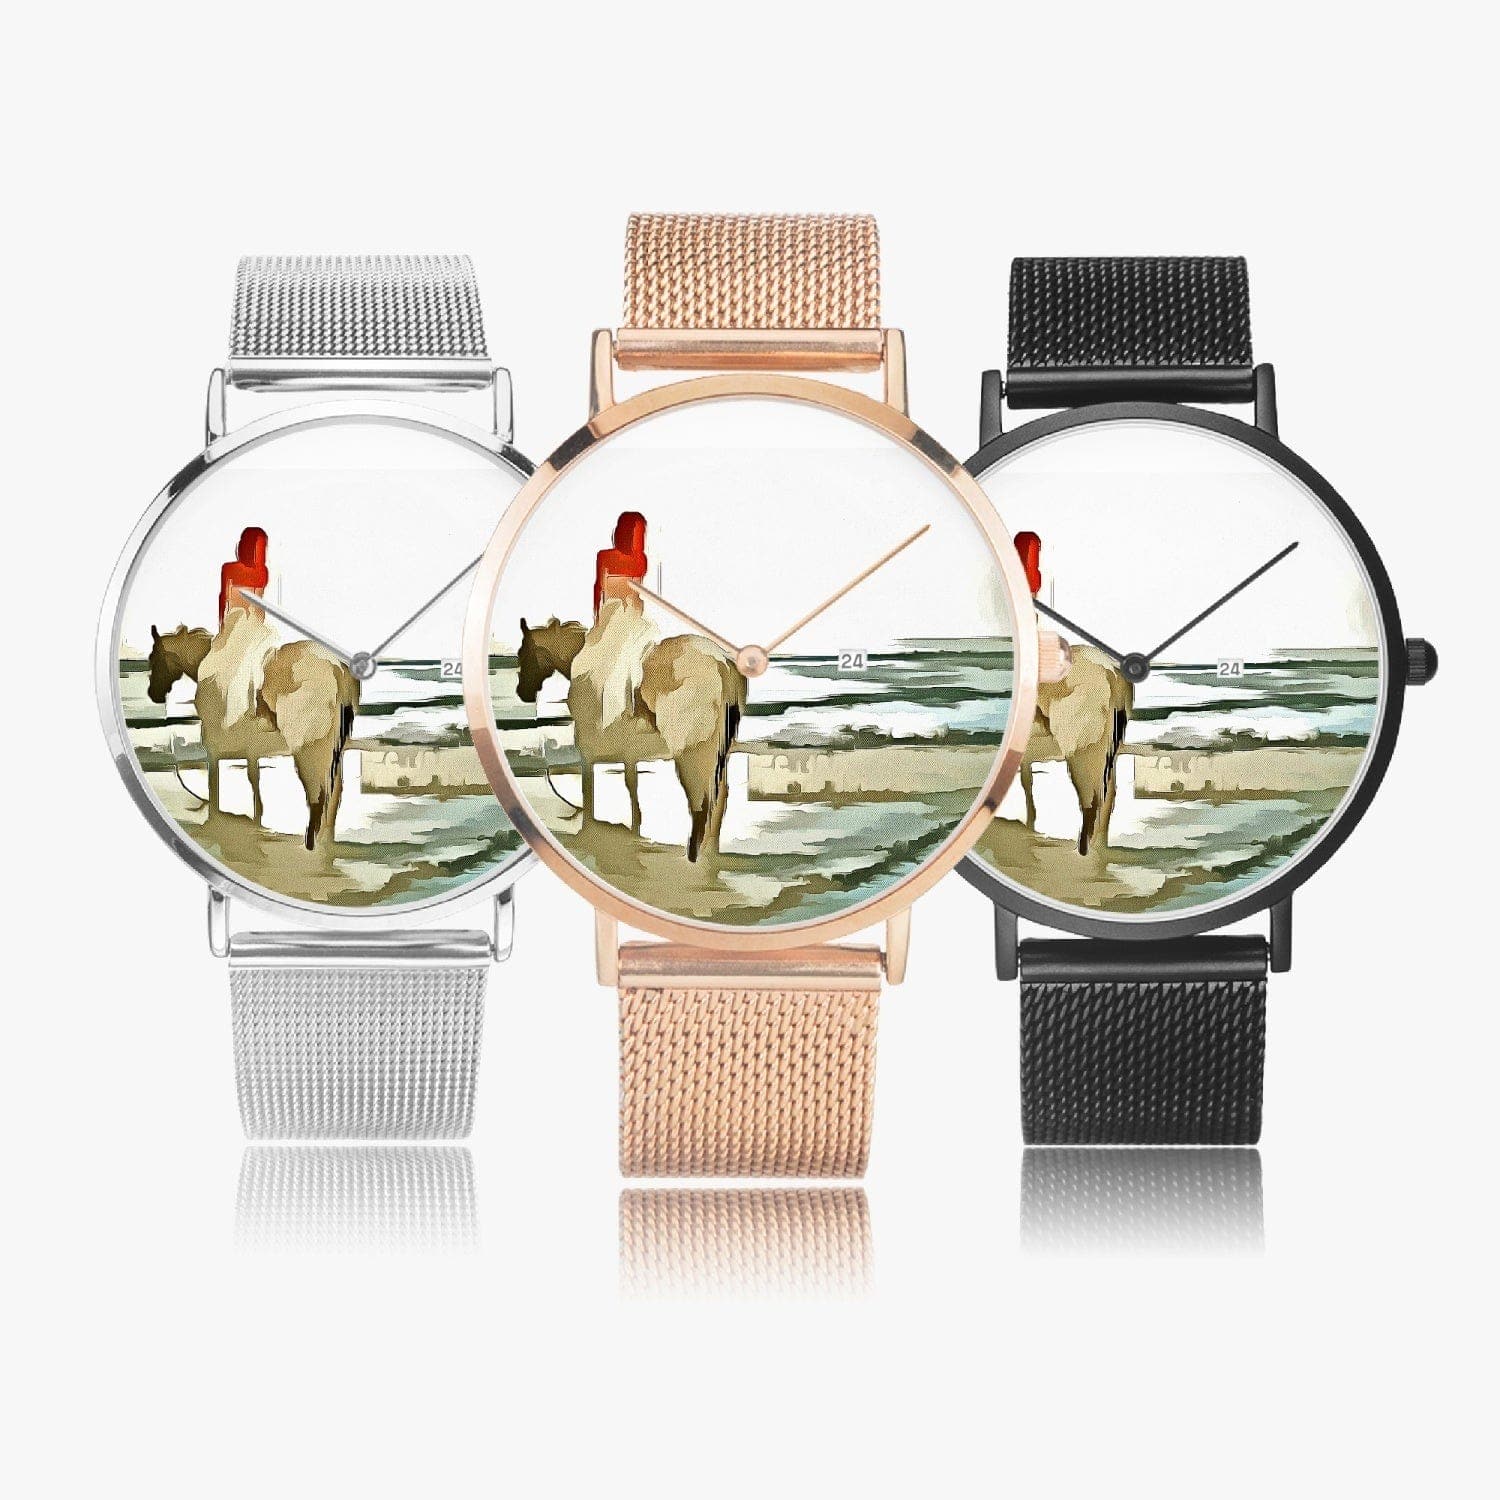 Horseback Ride on the Beach Stainless Steel Perpetual Calendar Quartz. Designer watch by Sensus Studio